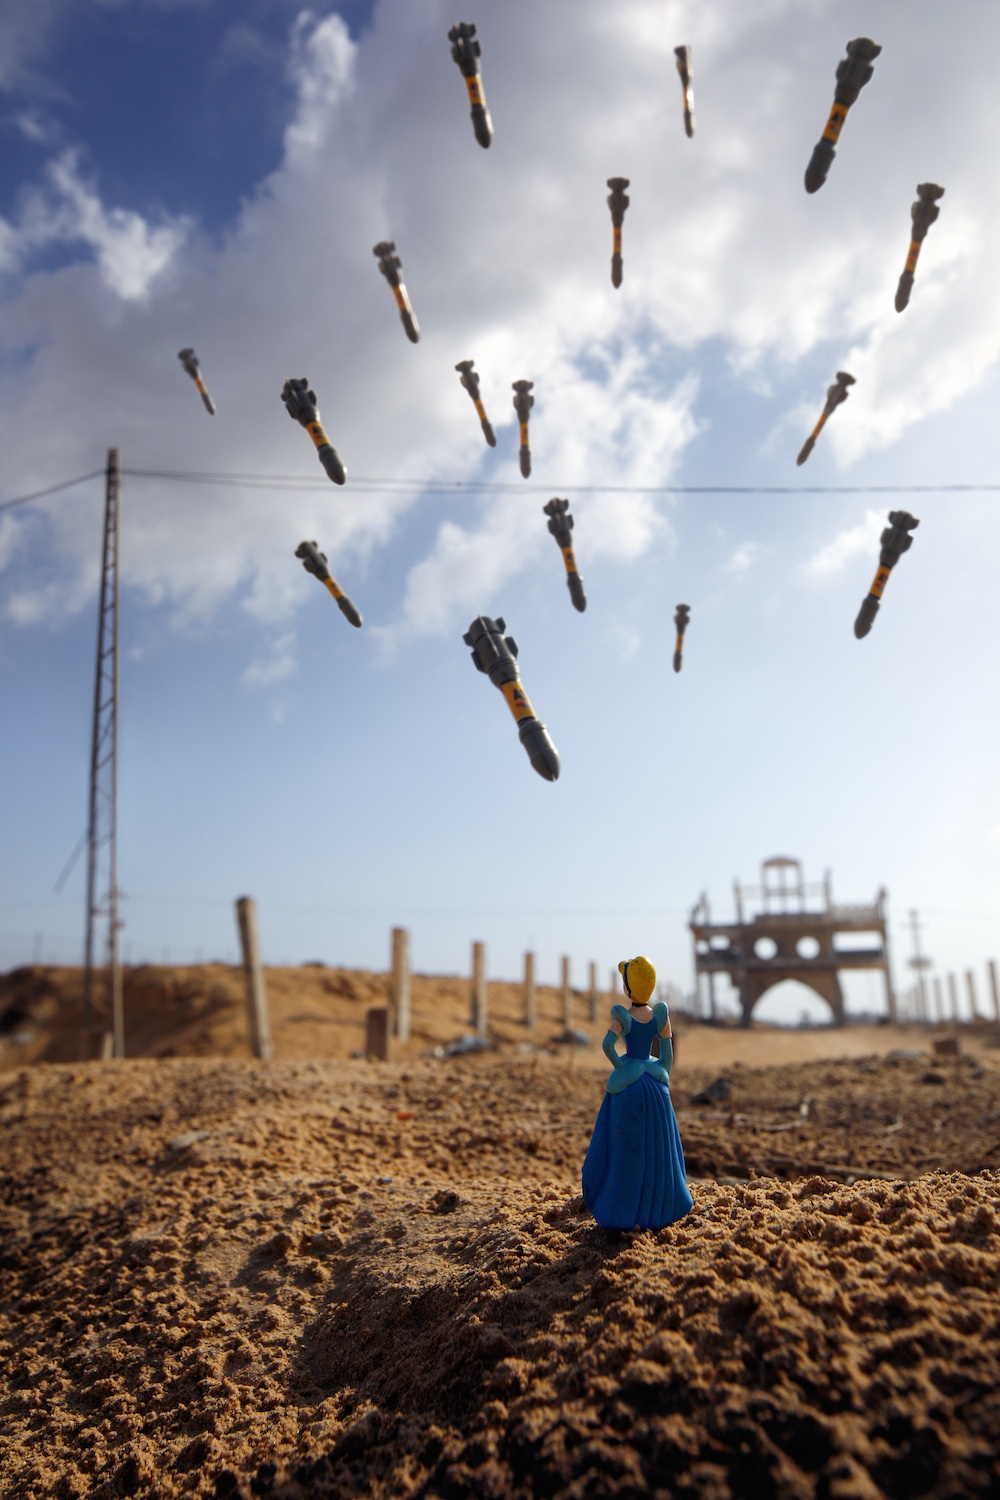 Brian McCarty, Gaza Cinderella, 2012, archival print, 51 x 34 inches, courtesy the artist. © Brian McCarty.